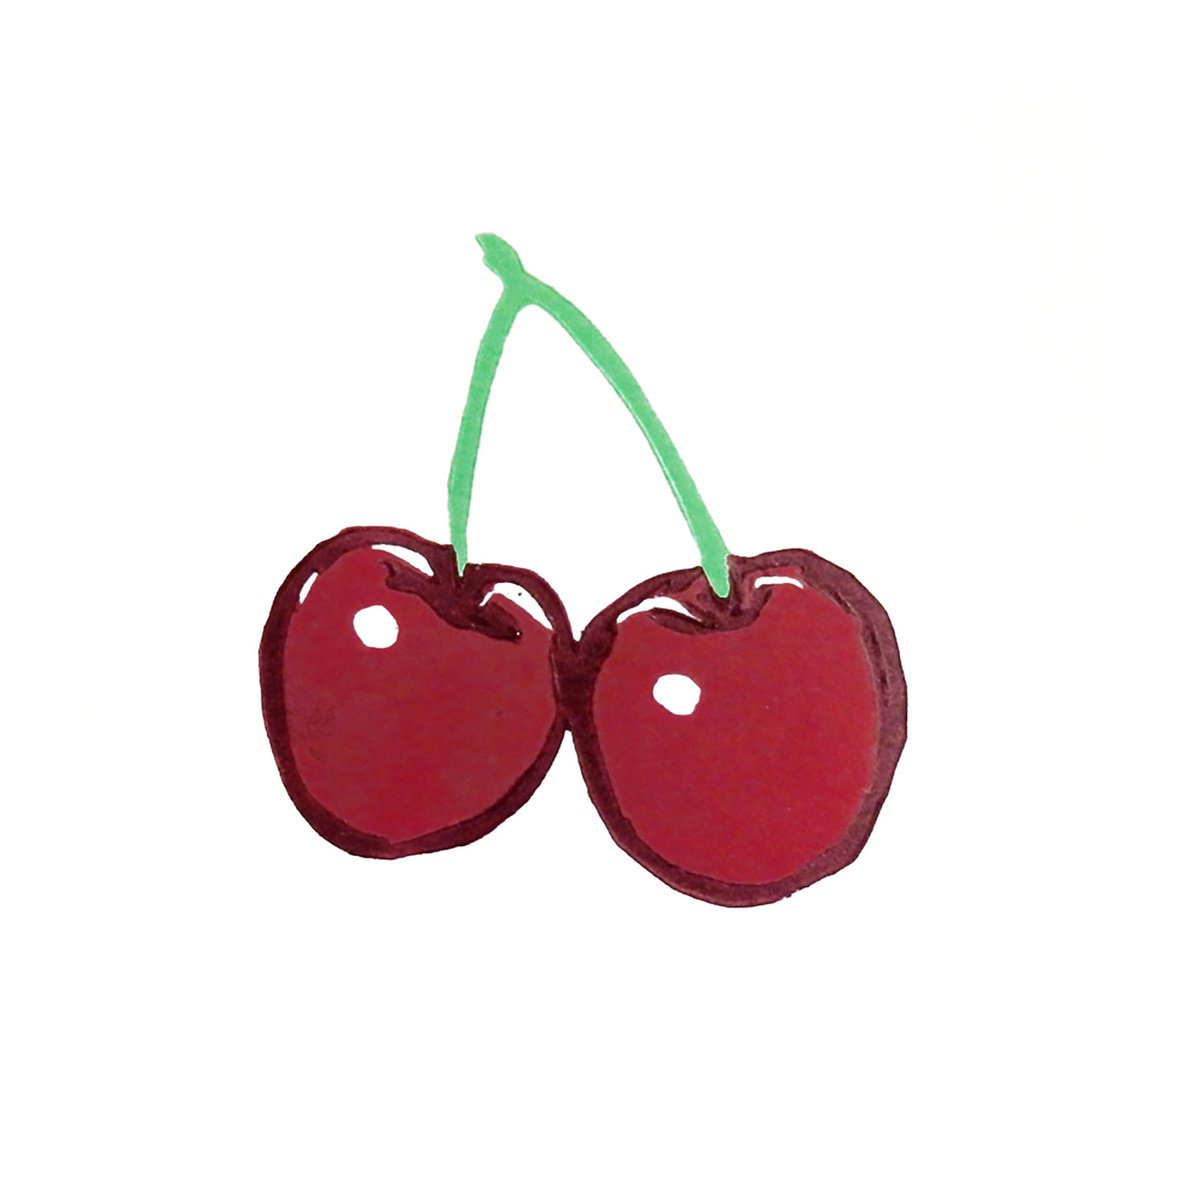 Cherries by Kirstie Dedman